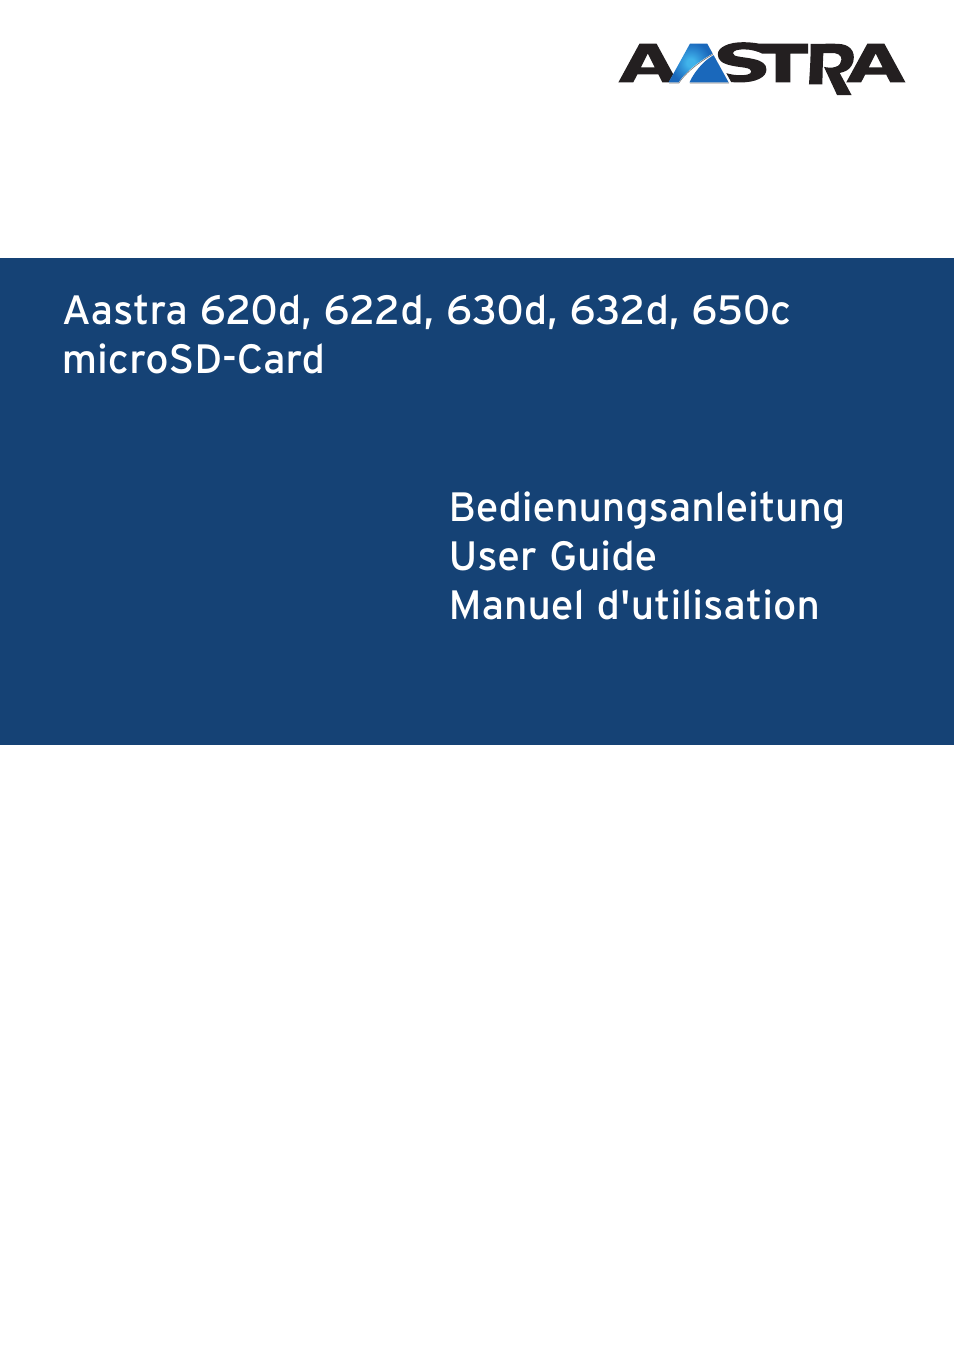 microSD-Card User Guide